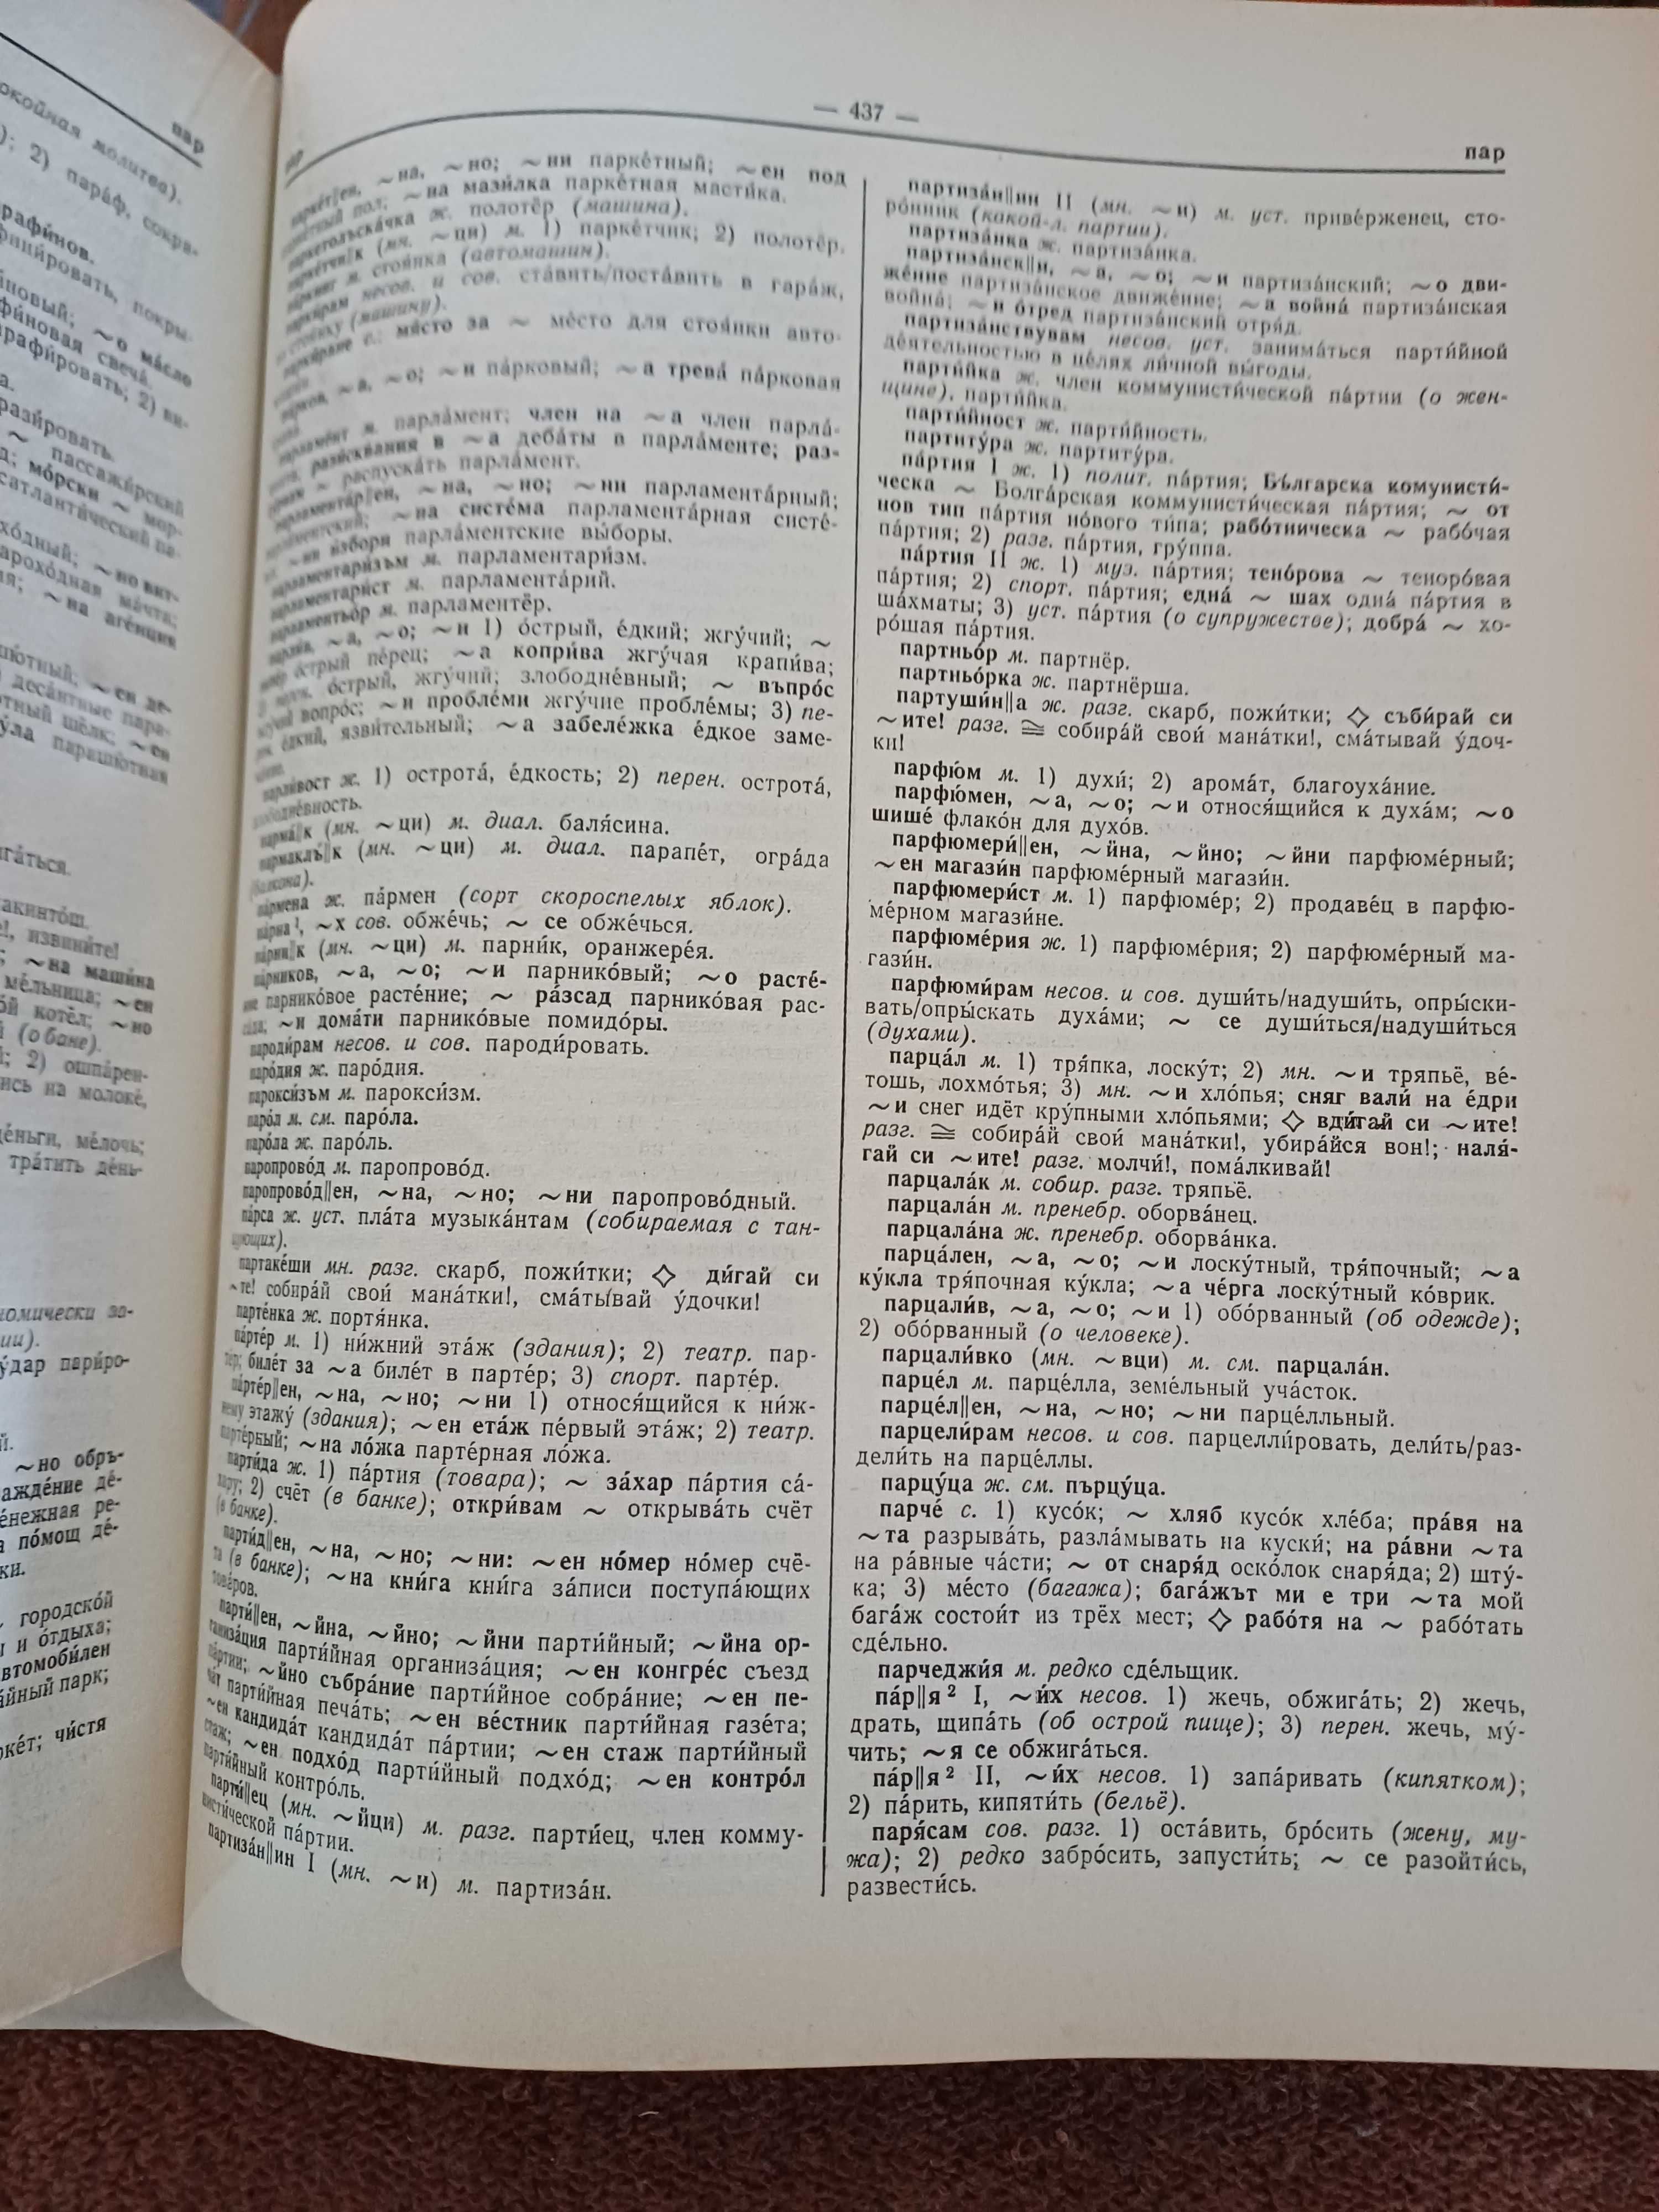 Българо-руски речник, изд. 1966 година